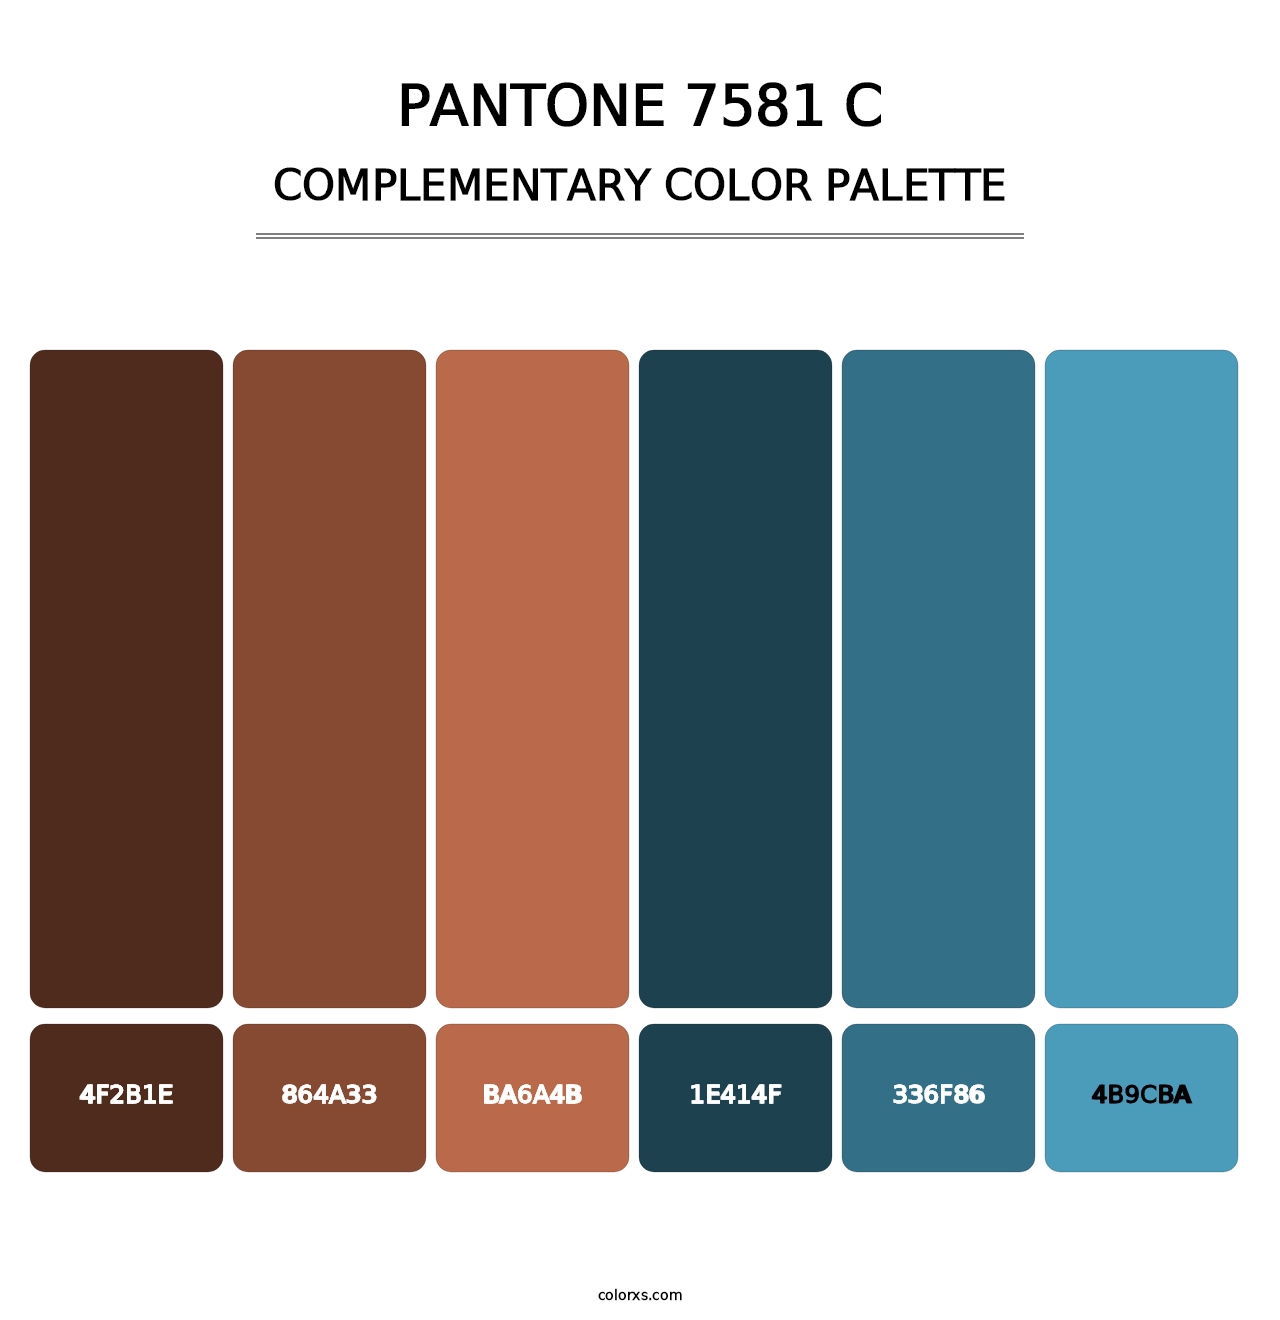 PANTONE 7581 C - Complementary Color Palette